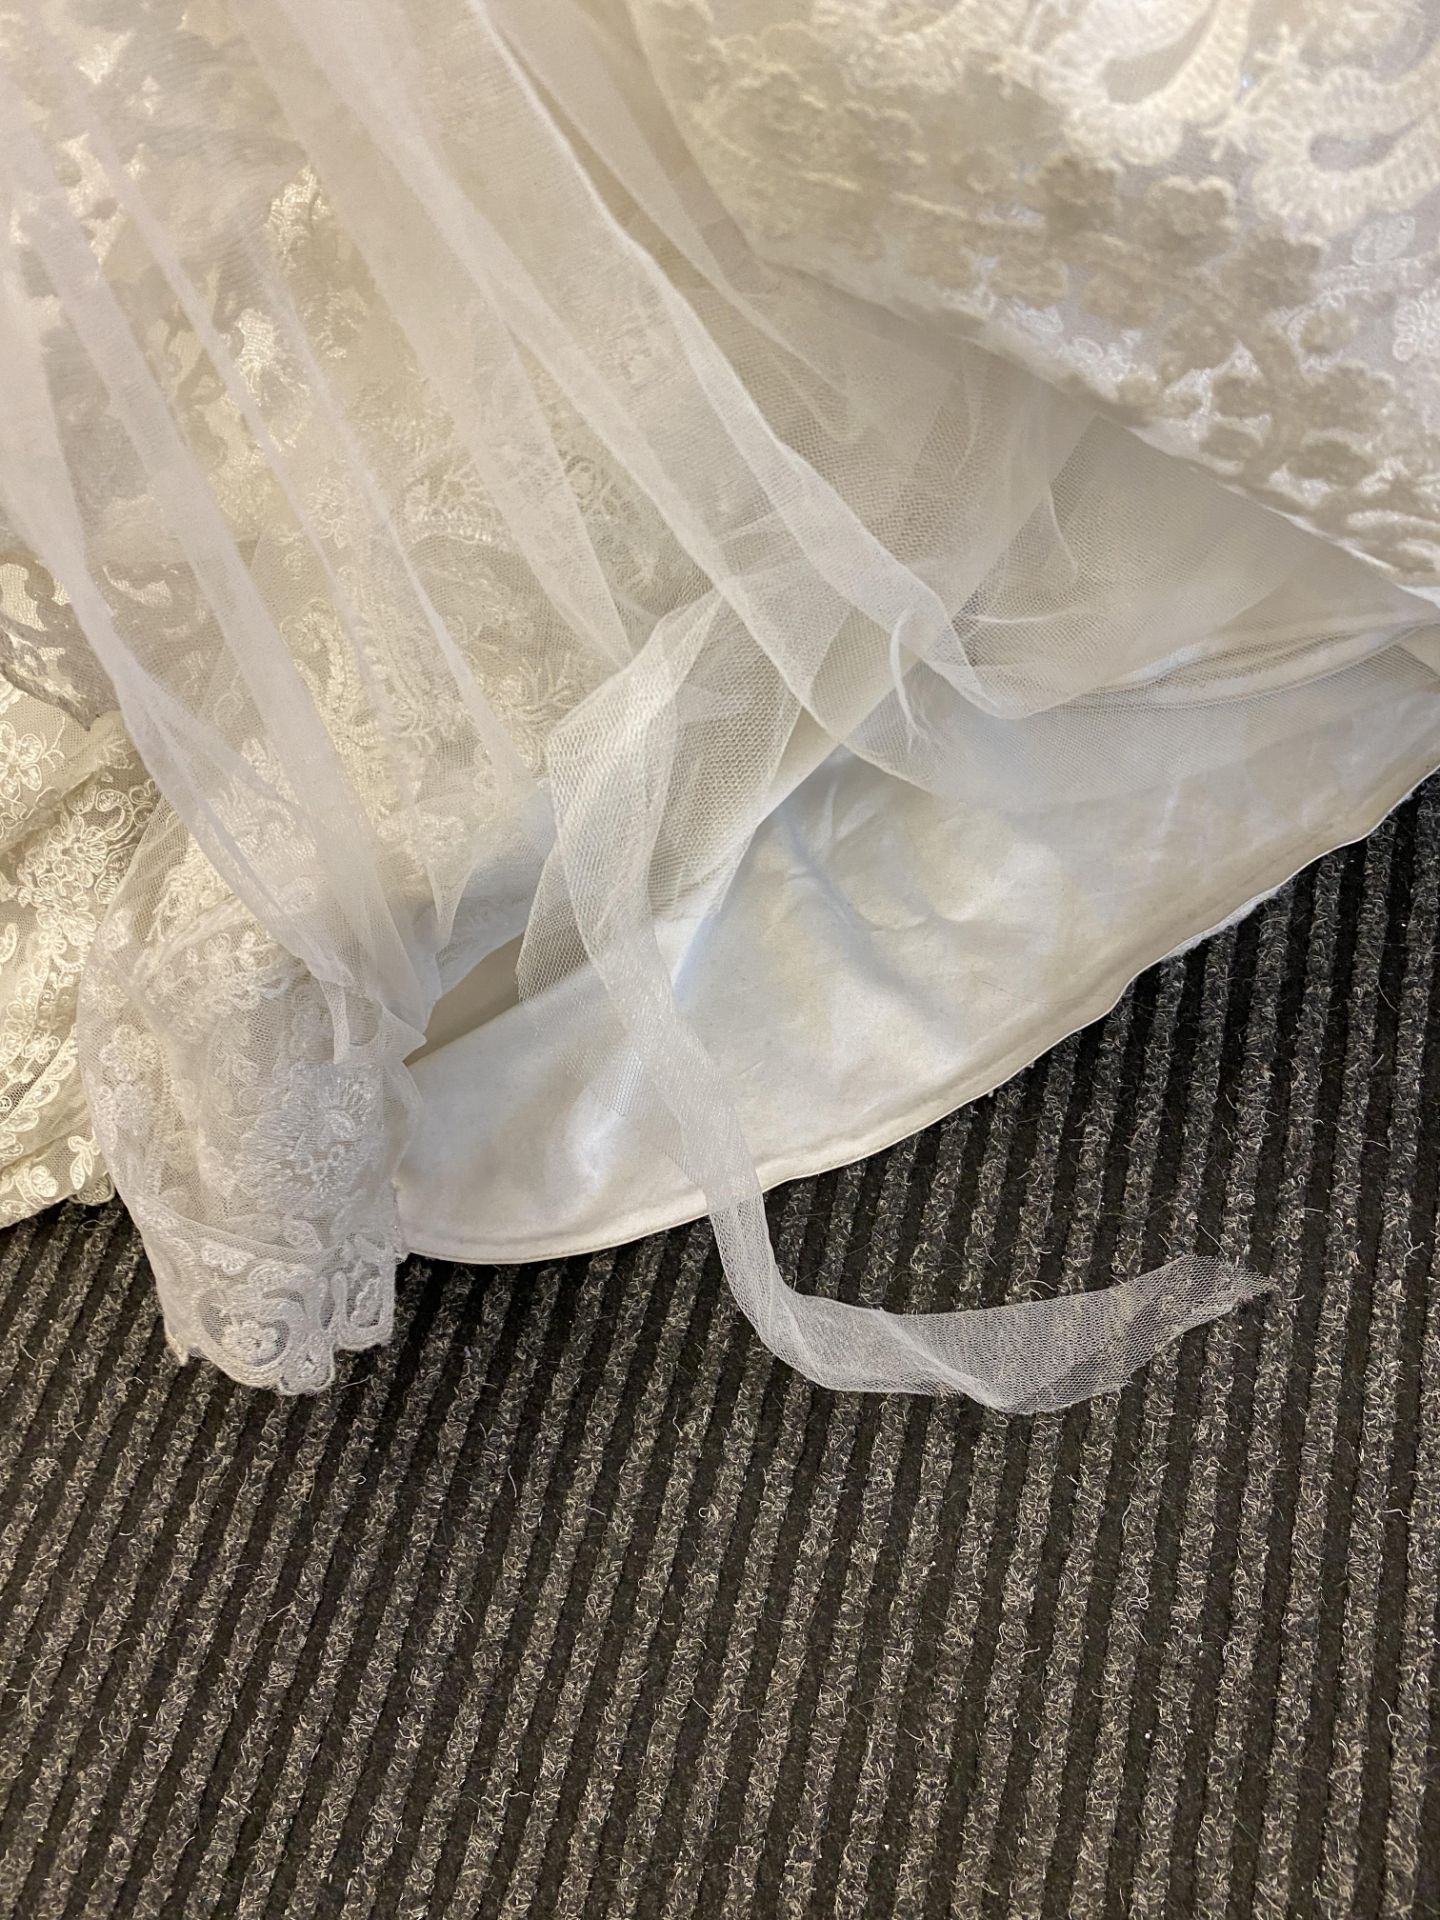 1 x MORI LEE '2787' Stunning Strapless Lace And Chiffon Designer Wedding Dress RRP £1,200 UK 12 - Image 9 of 12